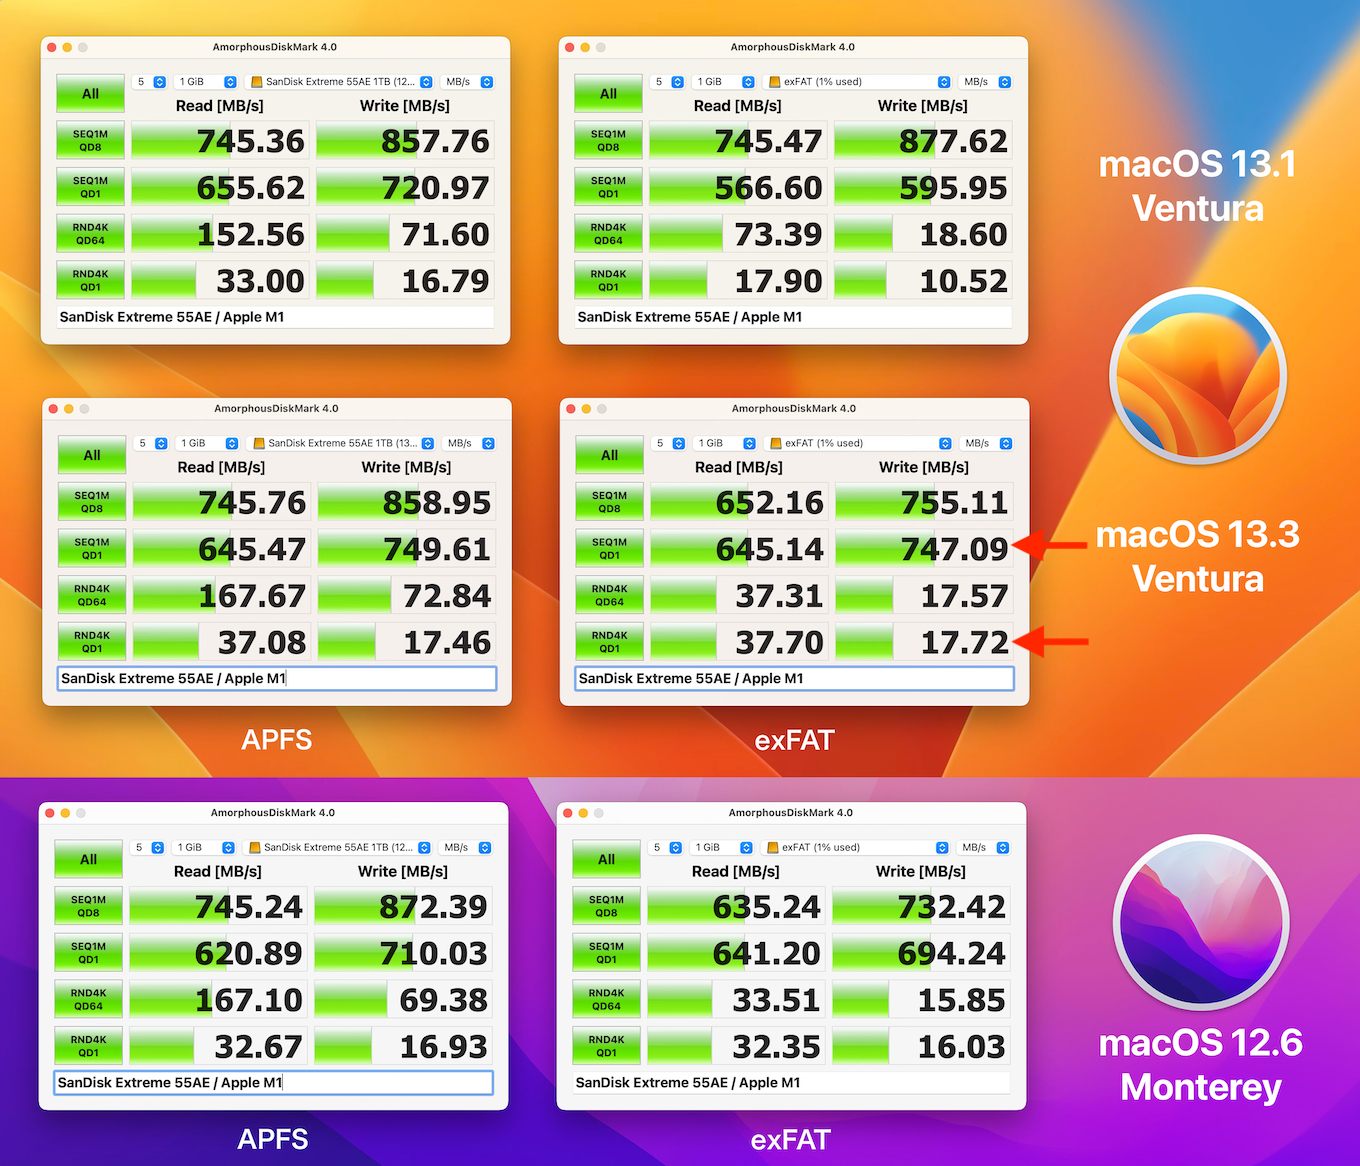 macOS 13.3 VenturaでのAPFSとexFATのAmorphousDiskMarkベンチマークテスト